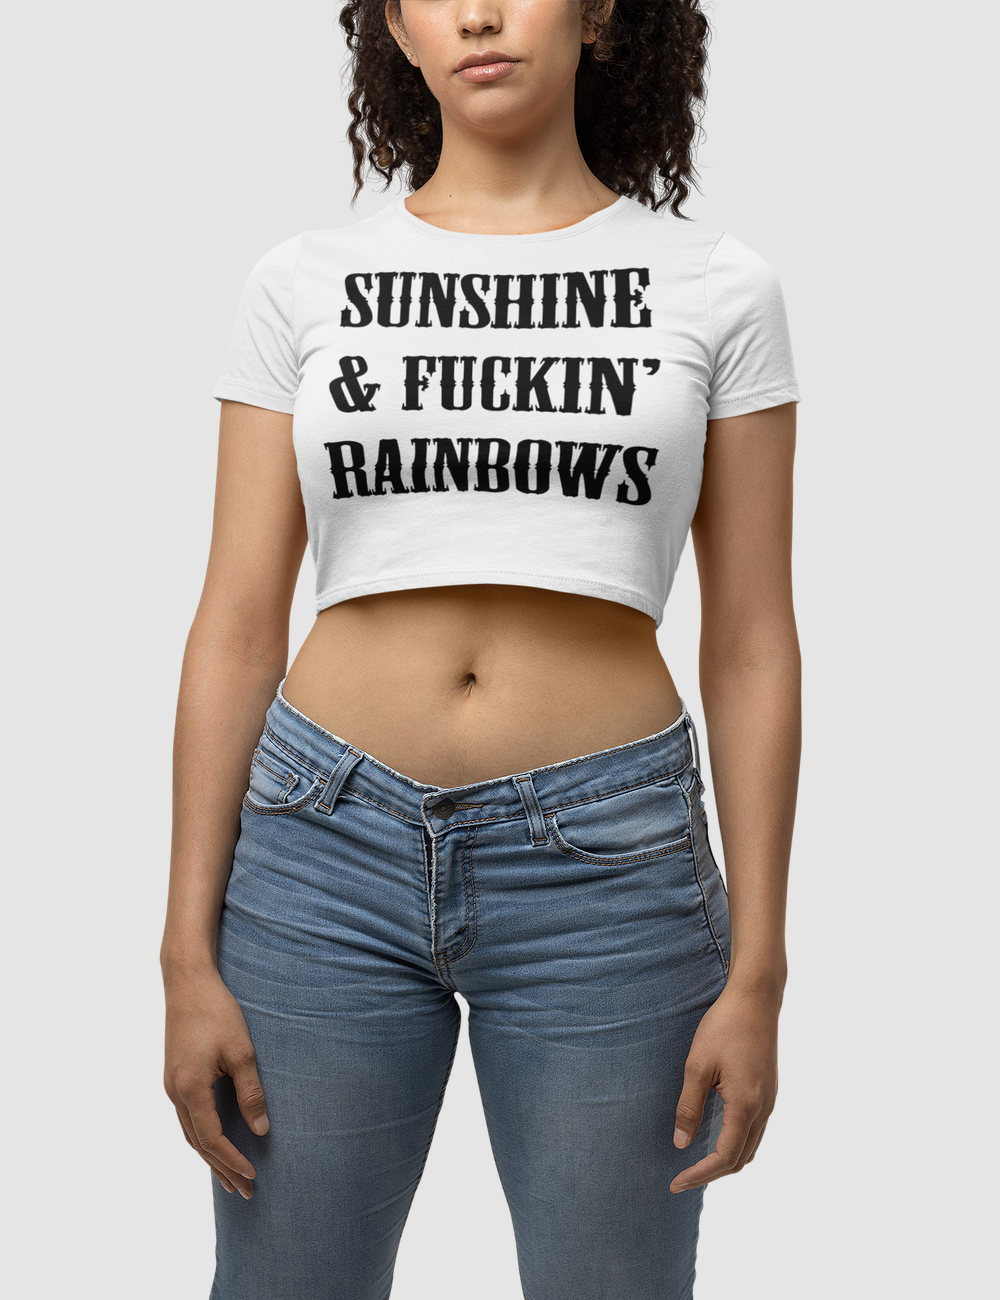 Sunshine & Fuckin' Rainbows Women's Fitted Crop Top T-Shirt OniTakai